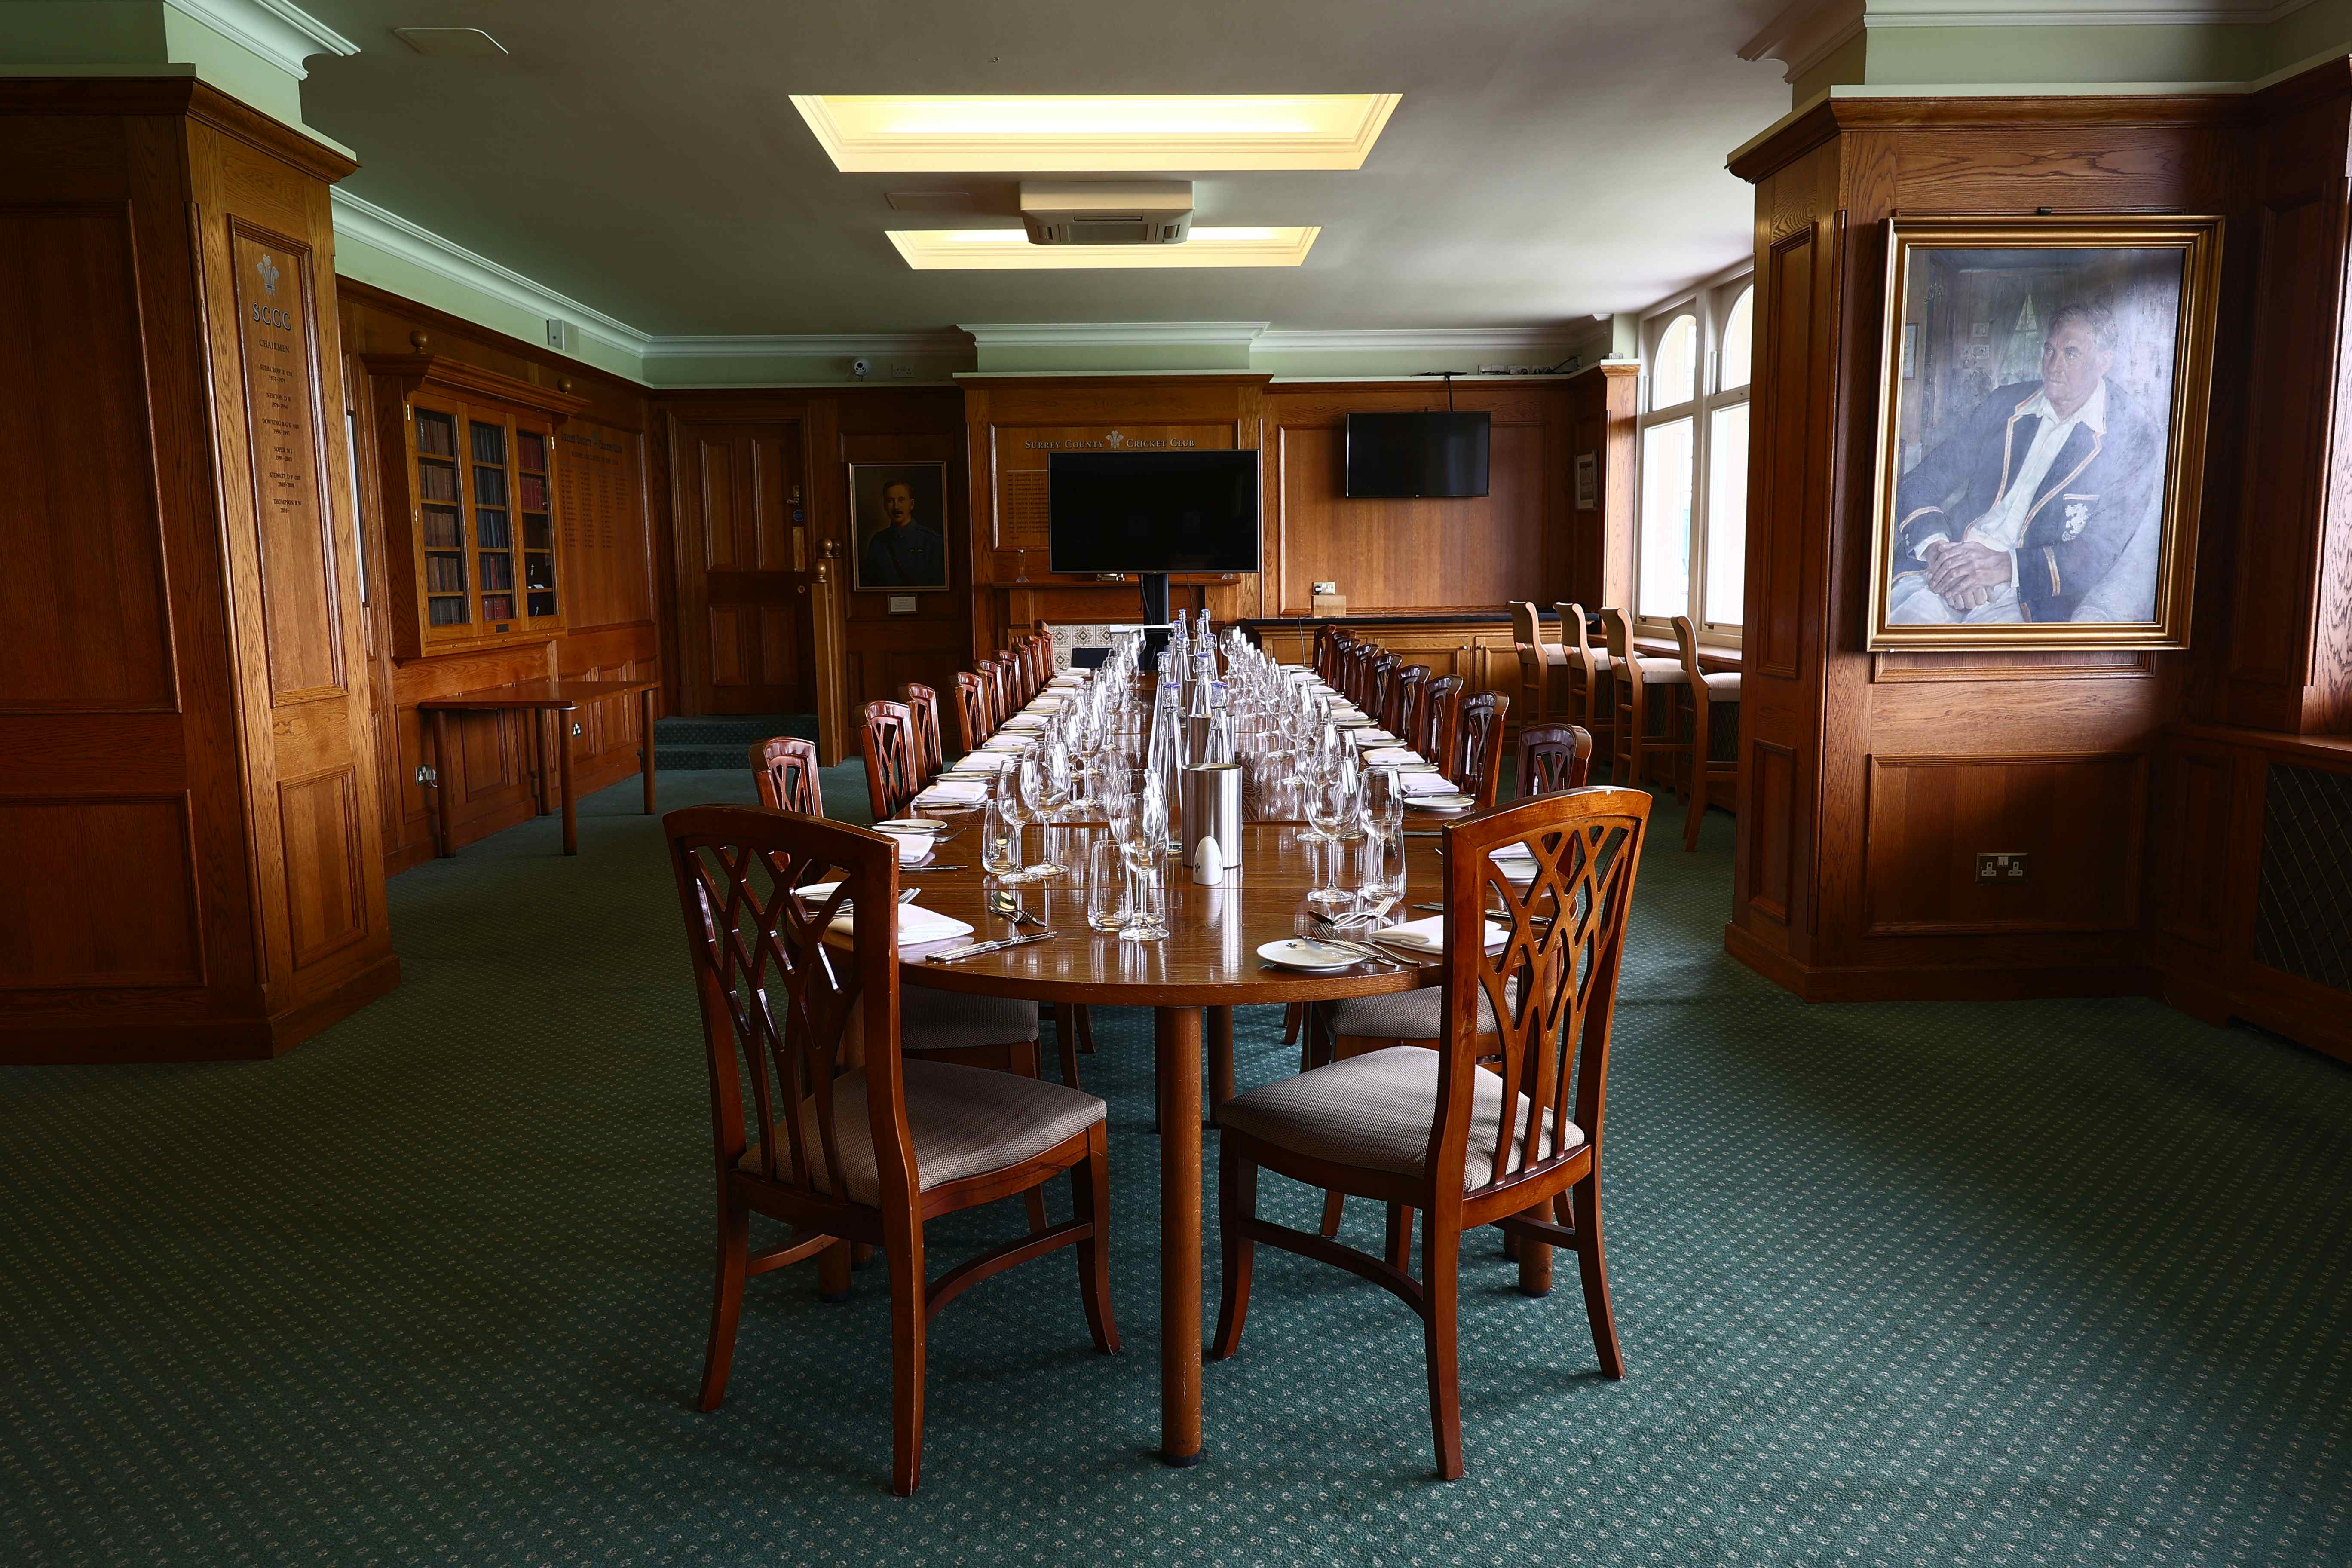 Committee Room, The Kia Oval 